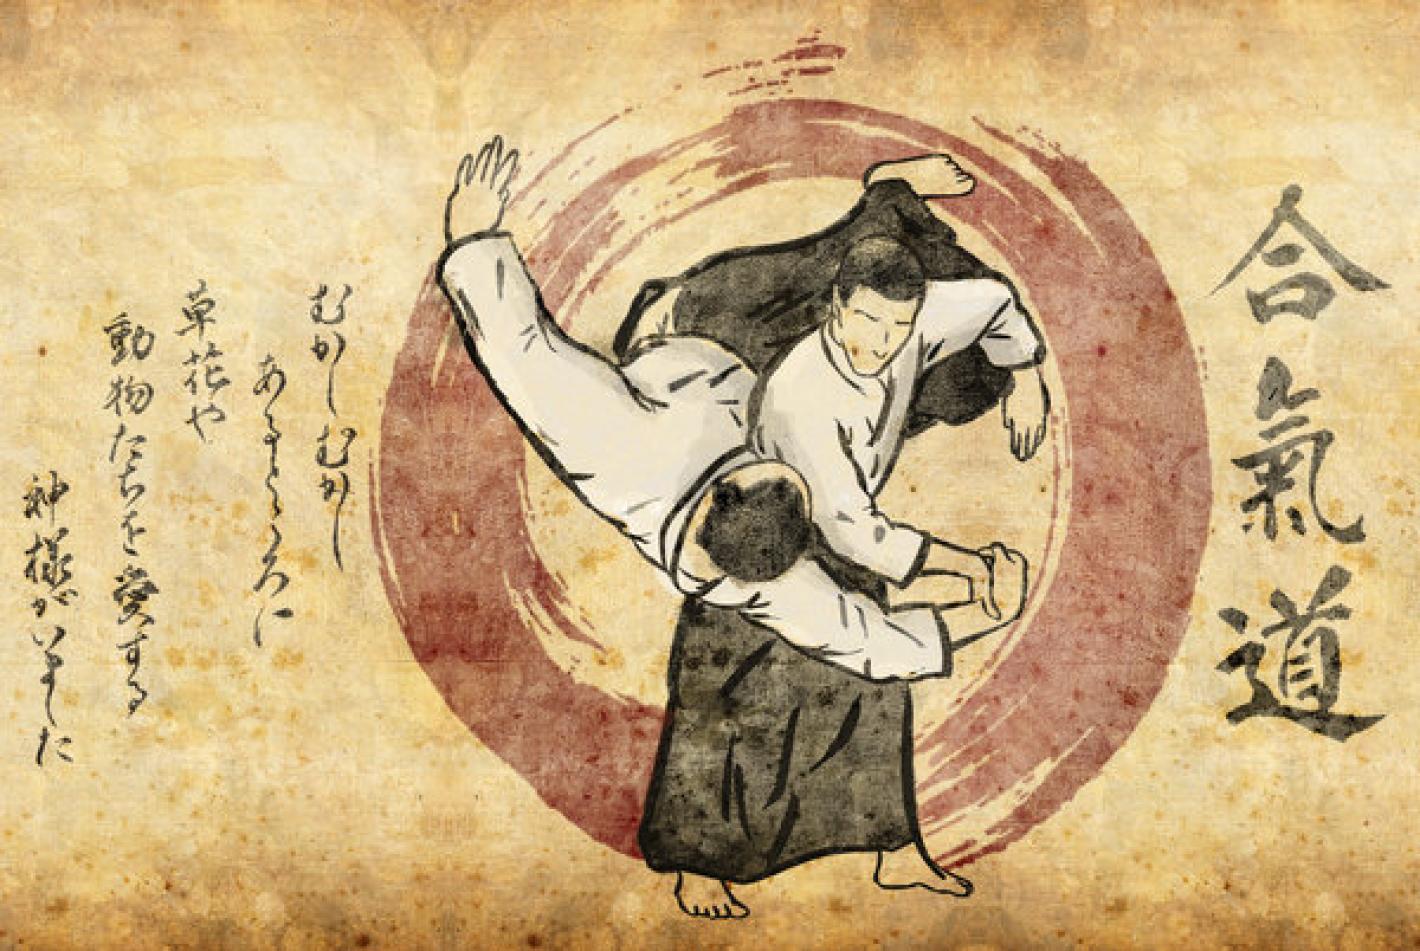 images/lazio/Aikido/medium/aikido.jpg